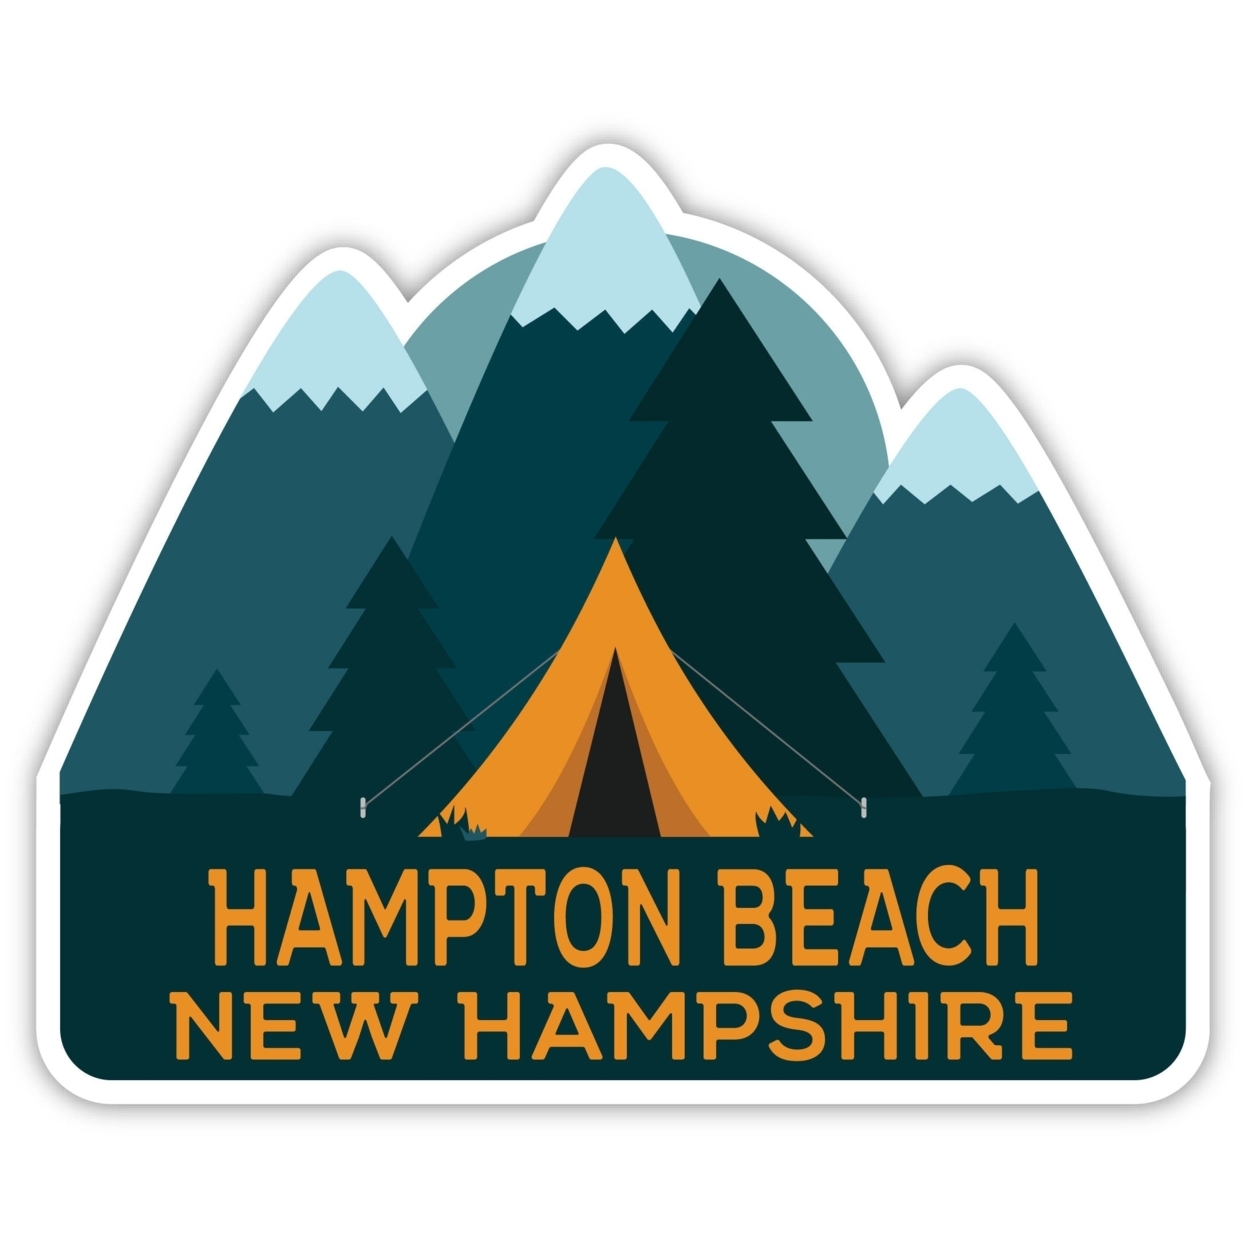 Hampton Beach New Hampshire Souvenir Decorative Stickers (Choose Theme And Size) - 4-Pack, 4-Inch, Tent